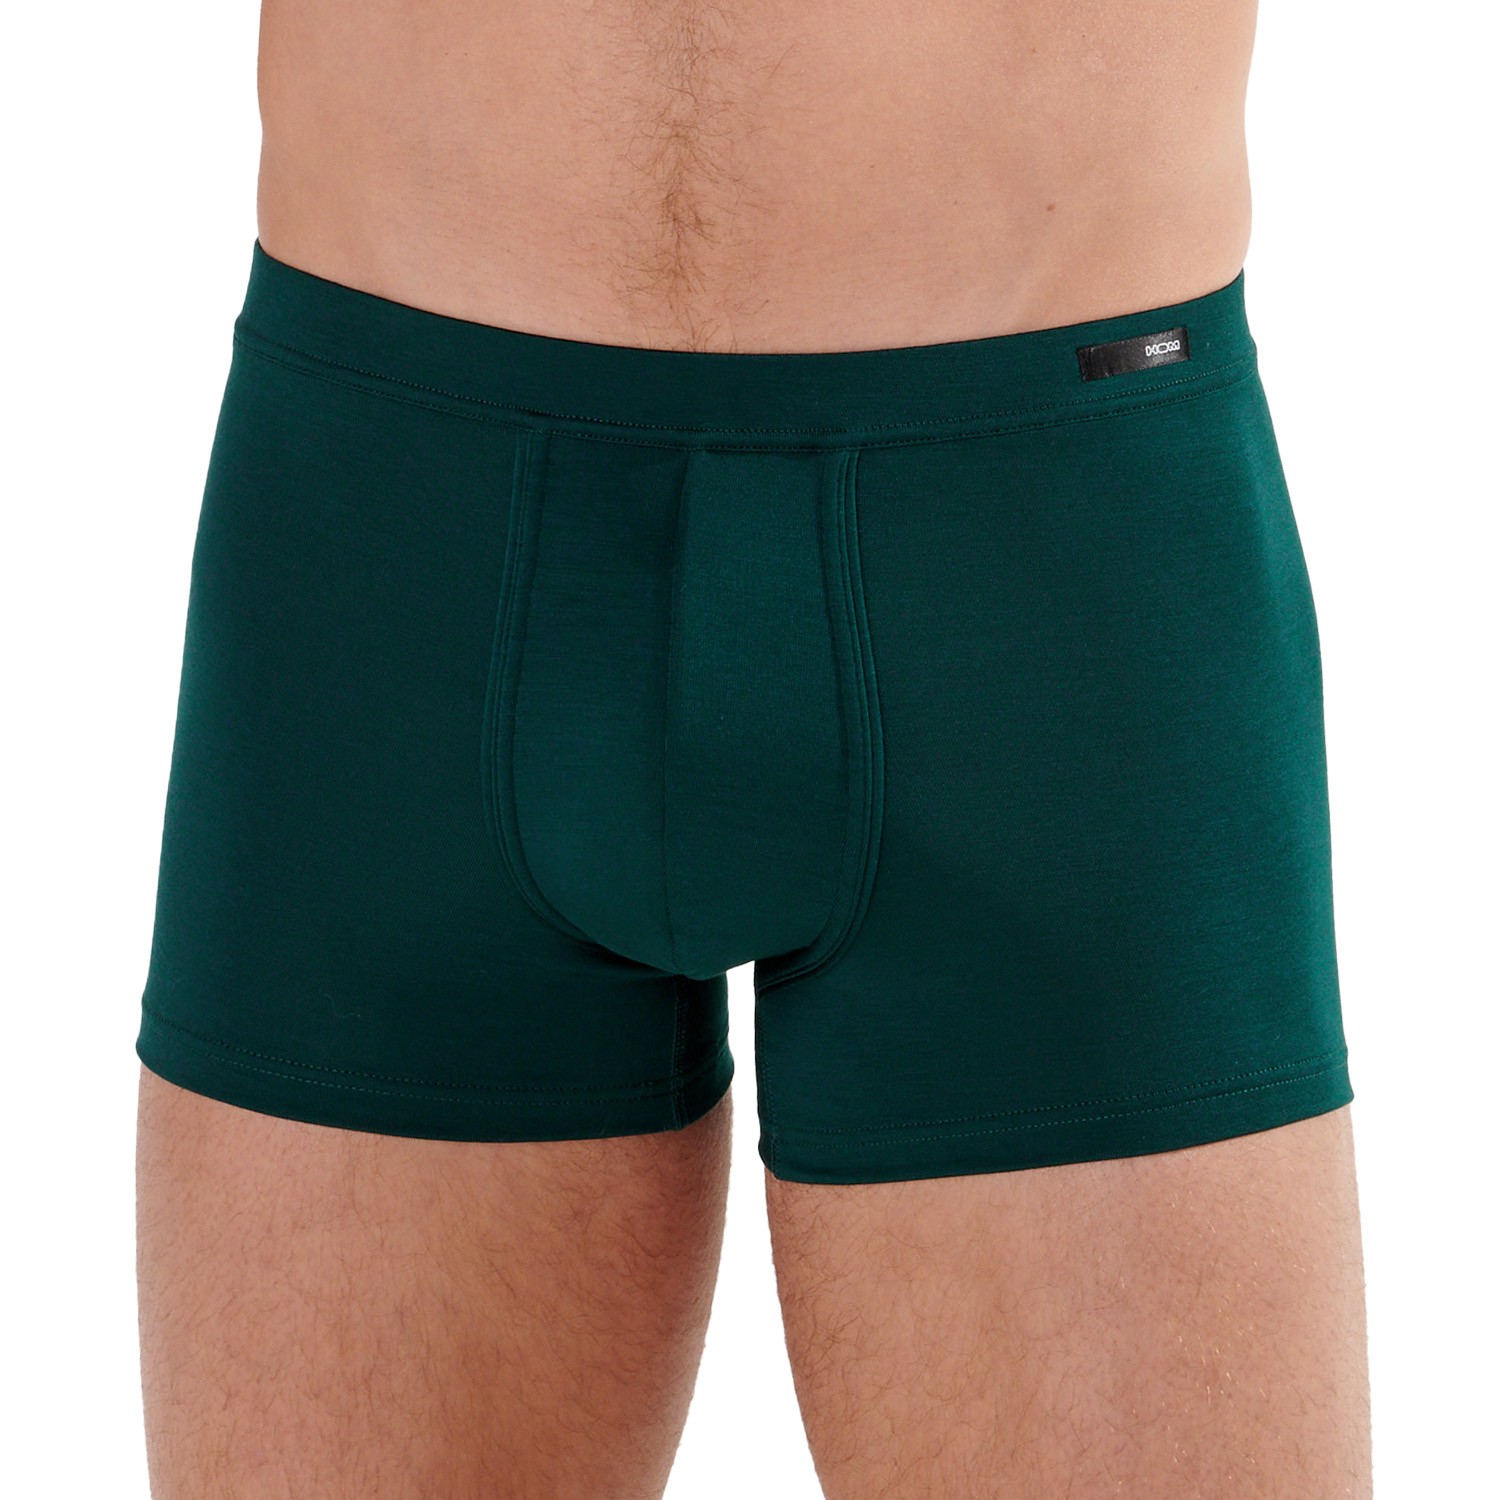 Boxer comfort Tencel Soft - green: Underwear for man brand HOM for